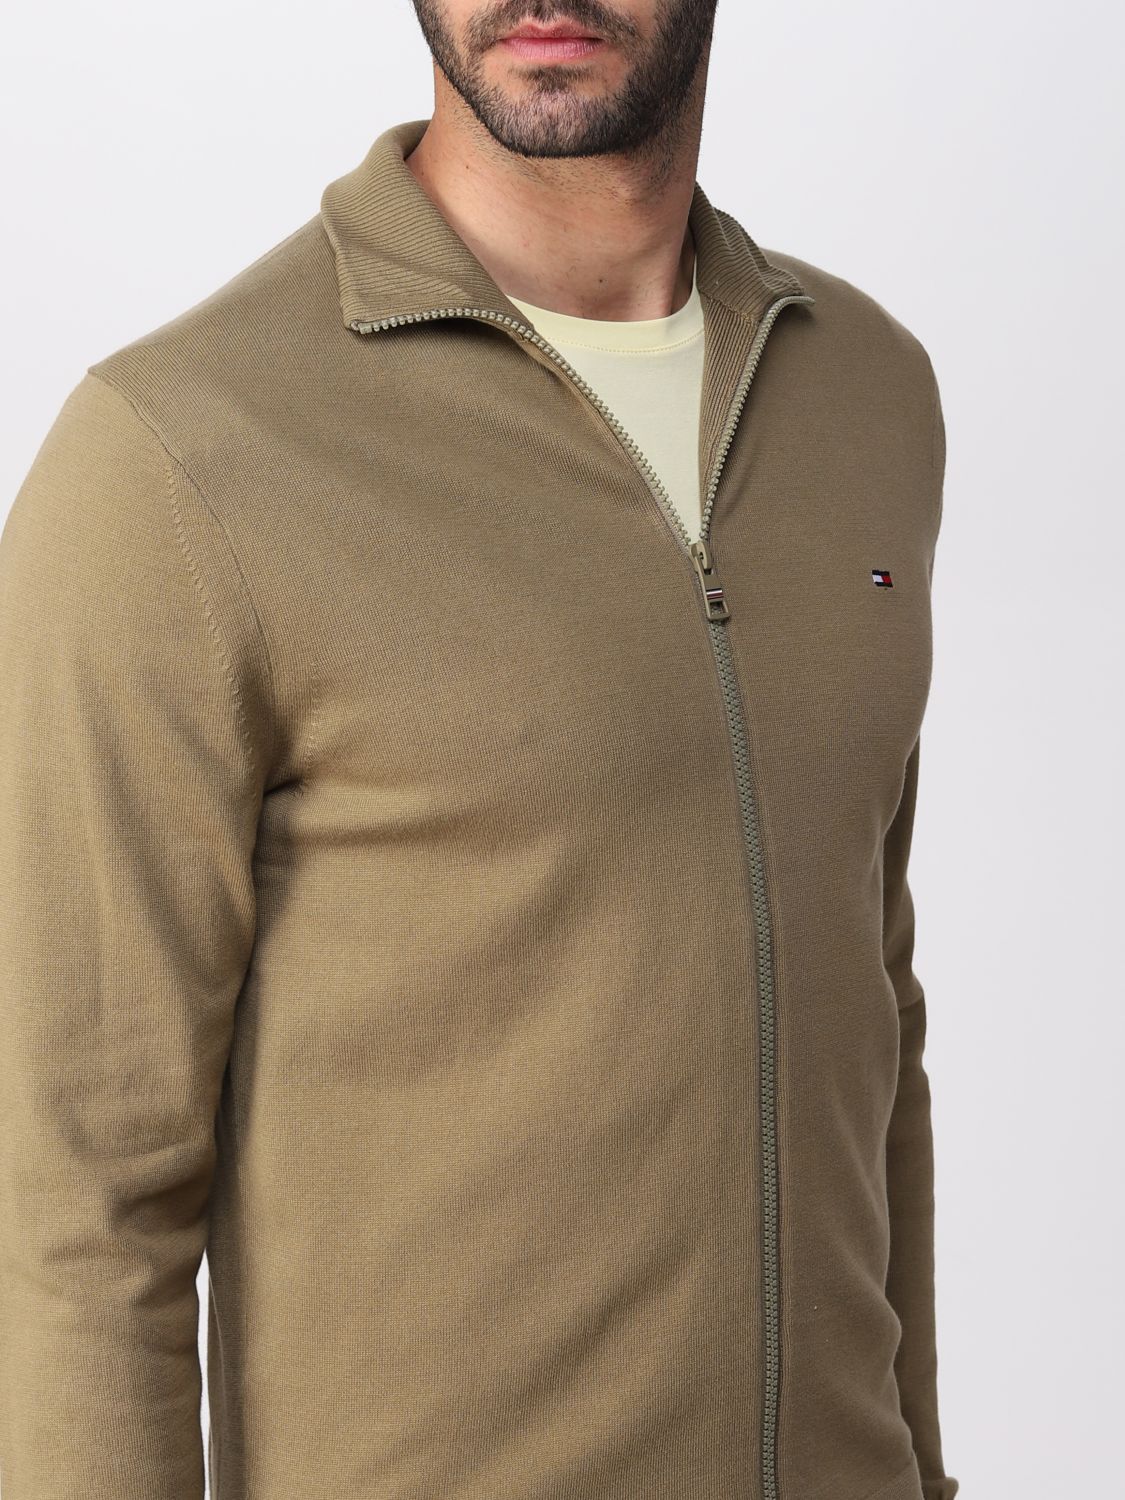 Cardigan Tommy Hilfiger: Tommy Hilfiger sweater brown 4